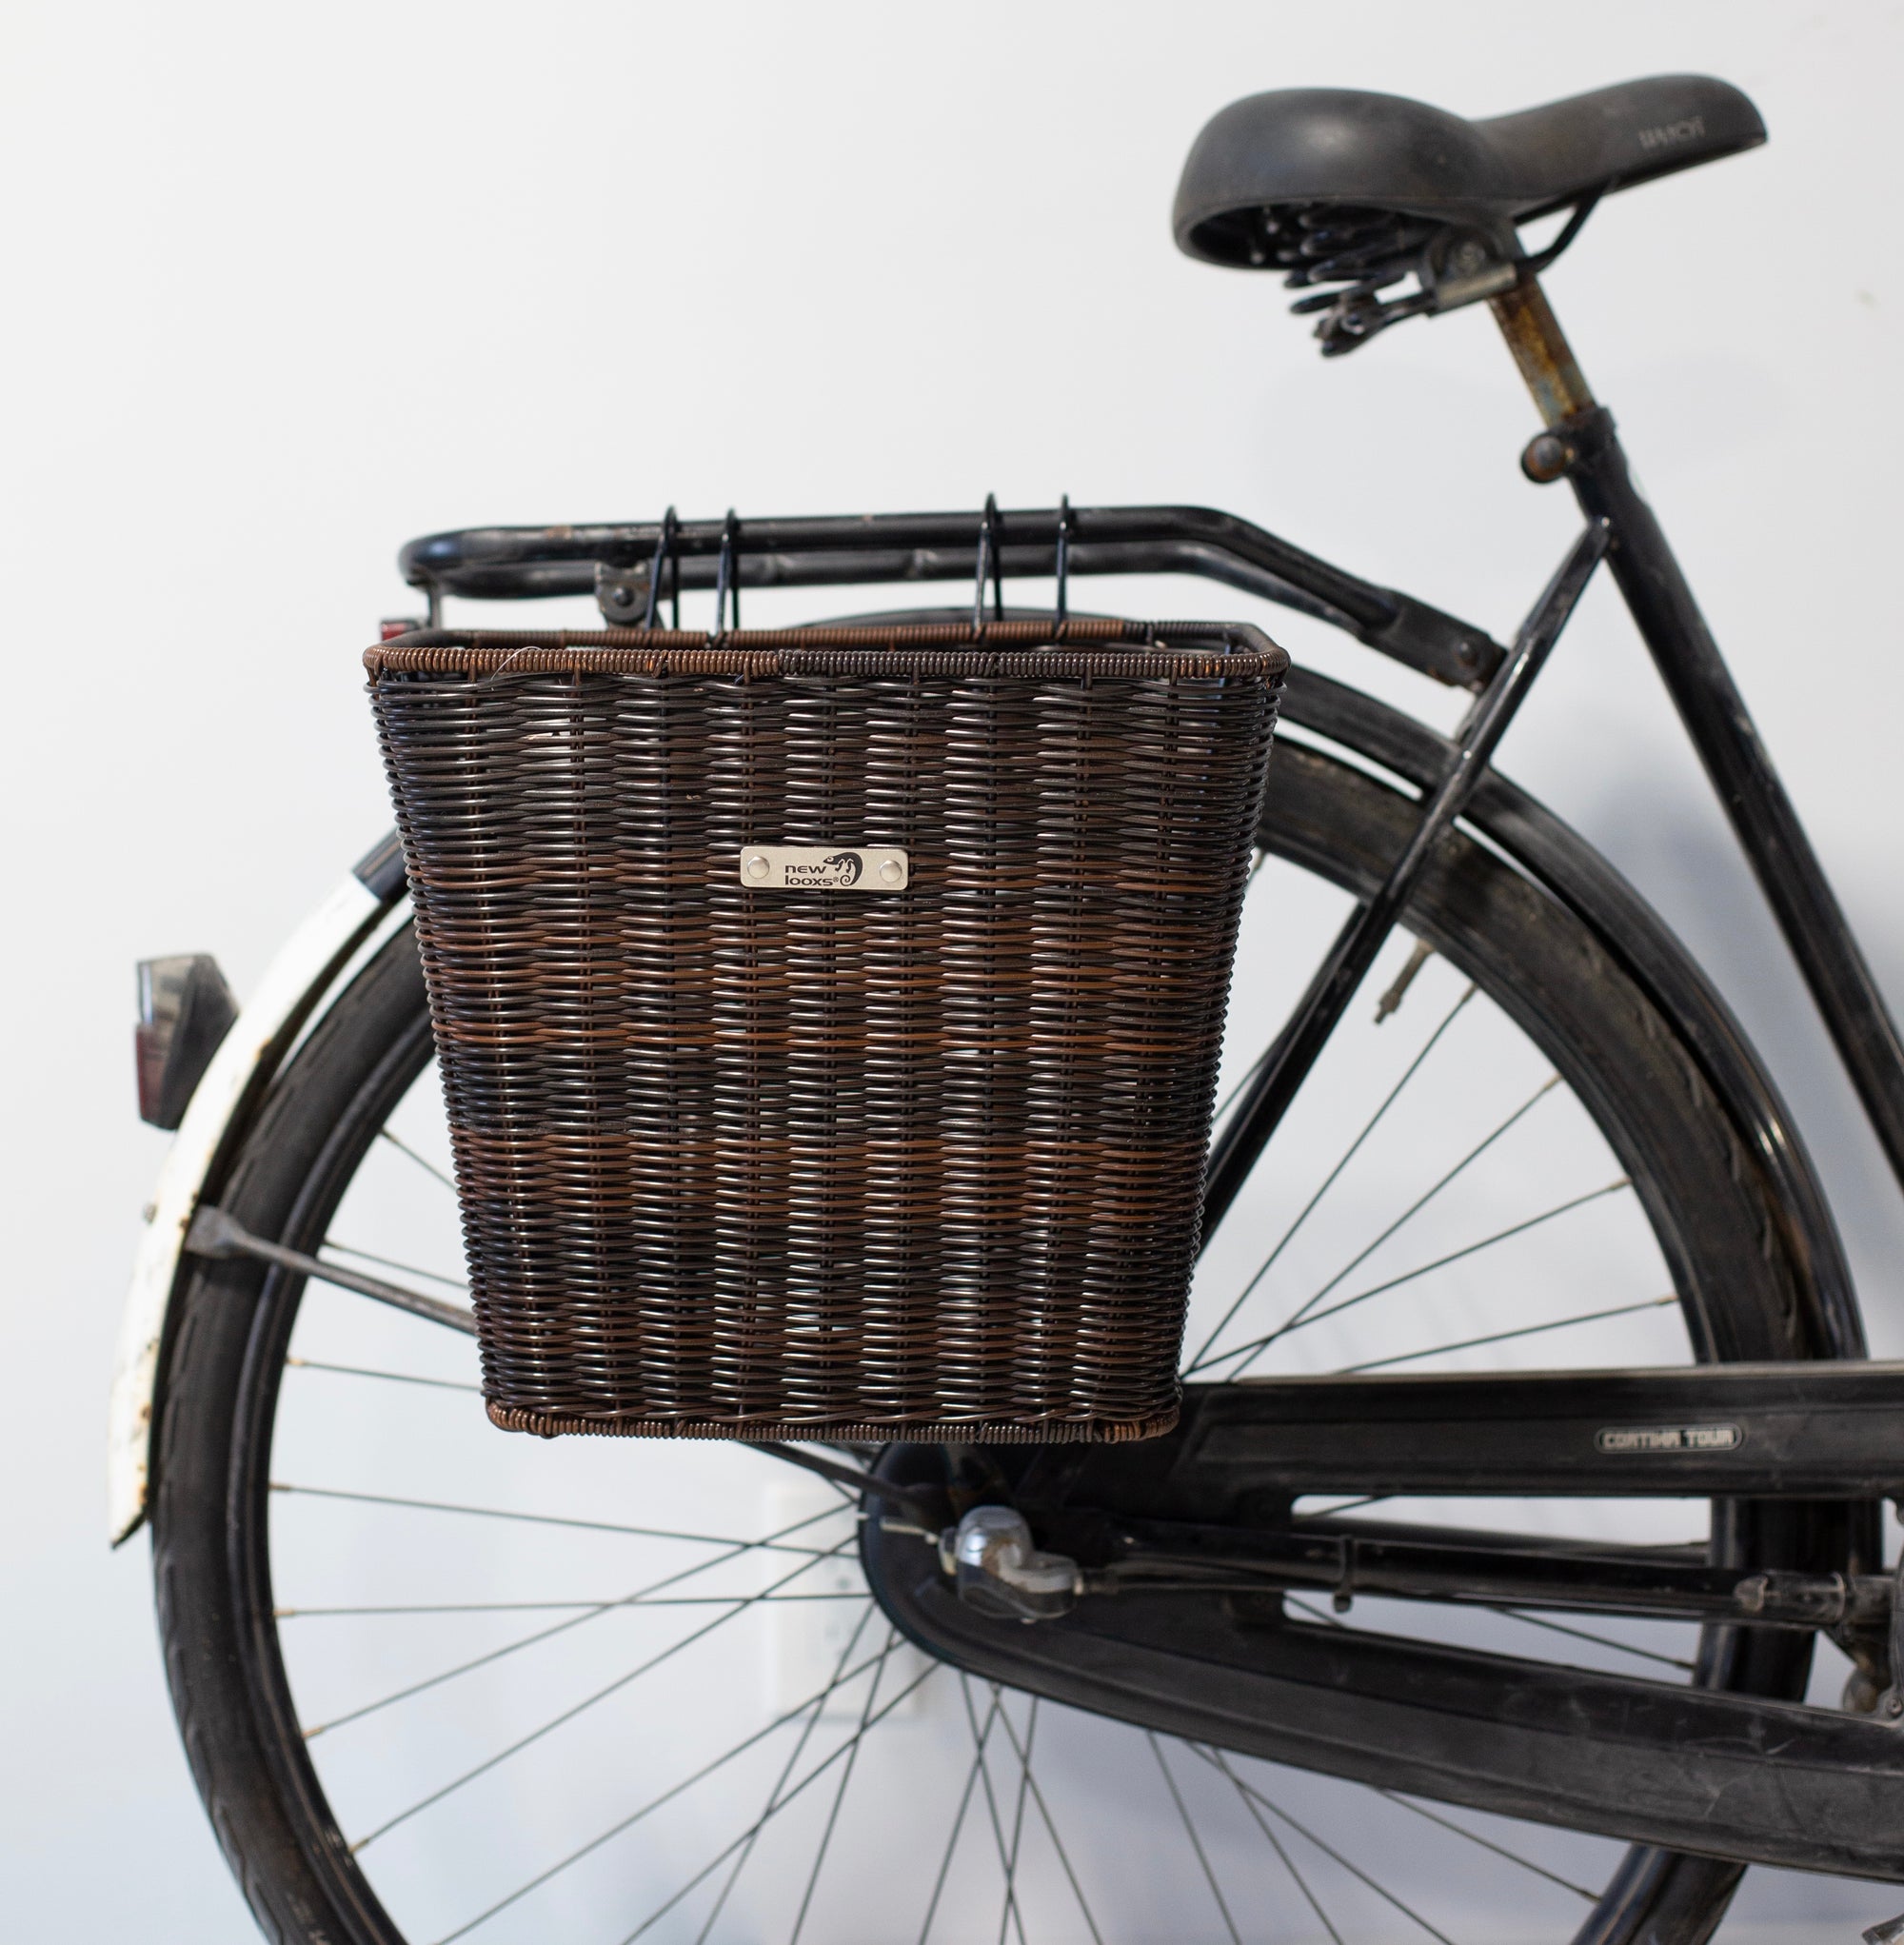 NEW LOOXS Lombok Bicycle Basket 18L Plastic